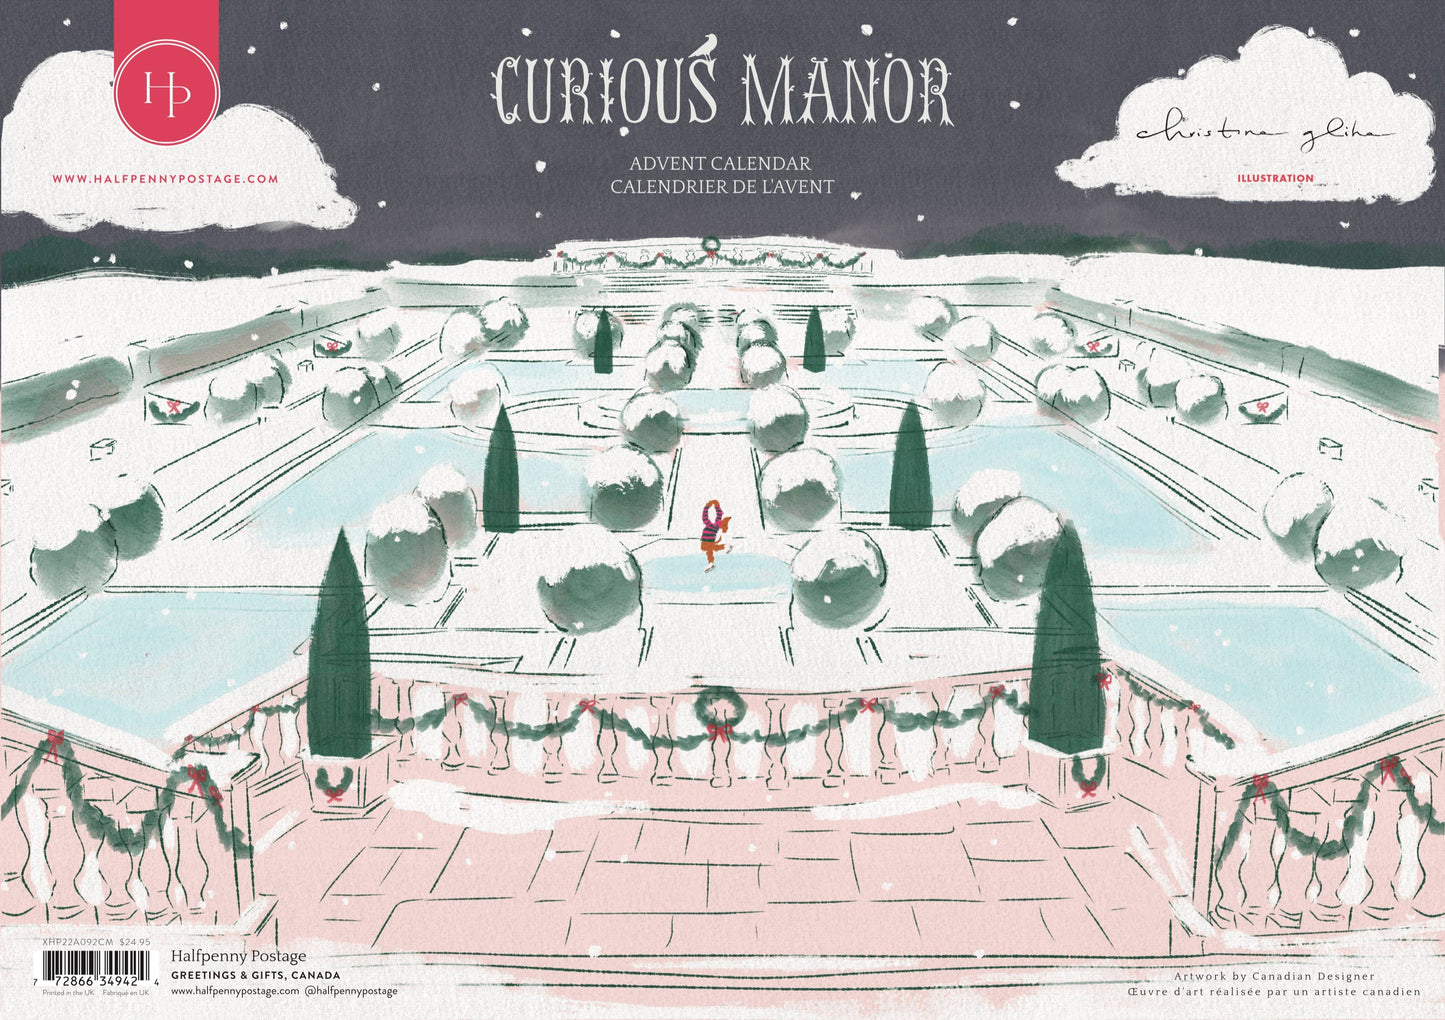 Holiday at Curious Manor - Advent Calendar